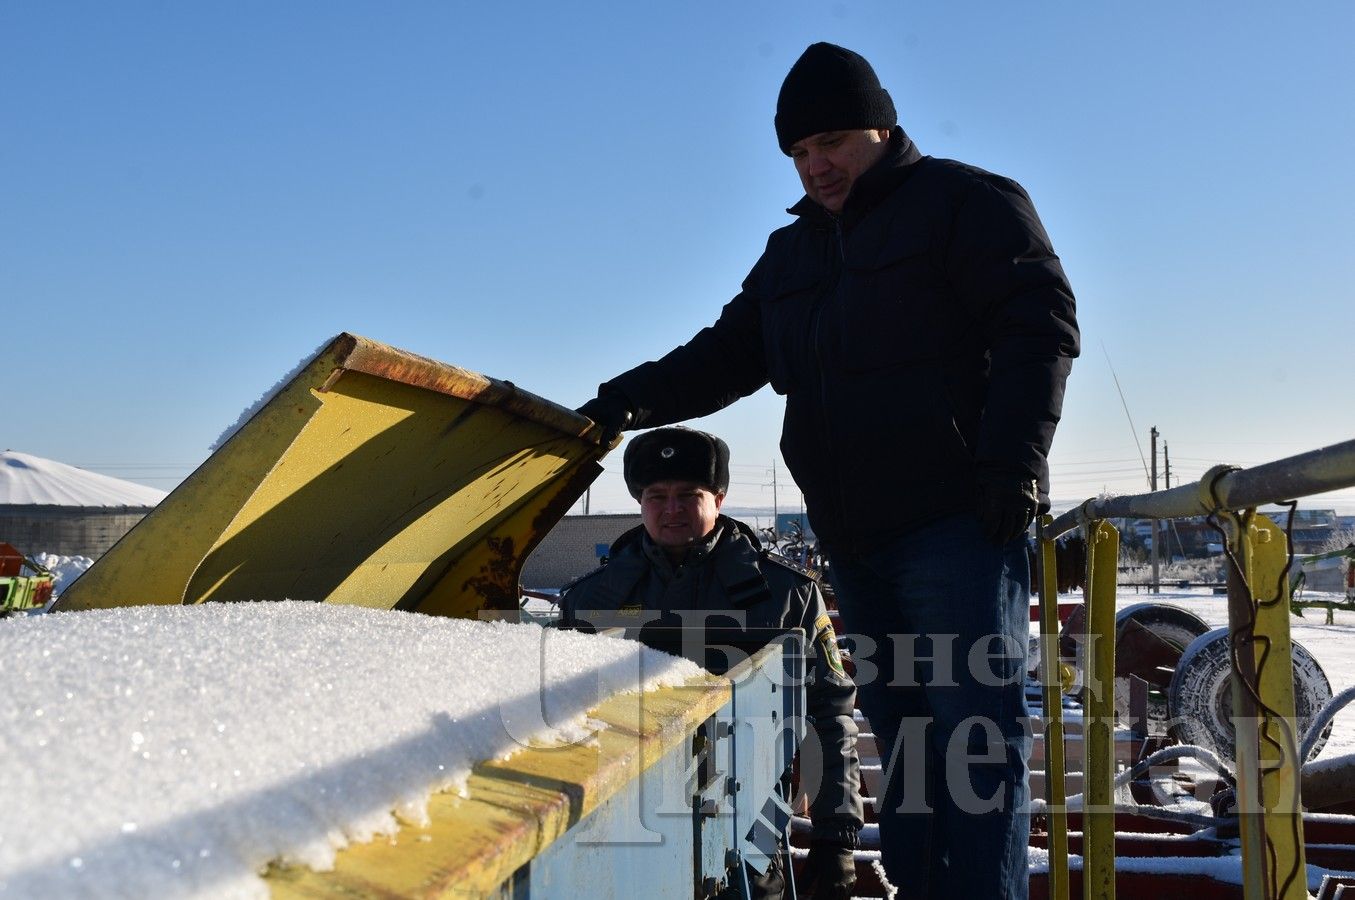 В Черемшане комиссия оценила постановку техники на зимнее хранение (ФОТОРЕПОРТАЖ)